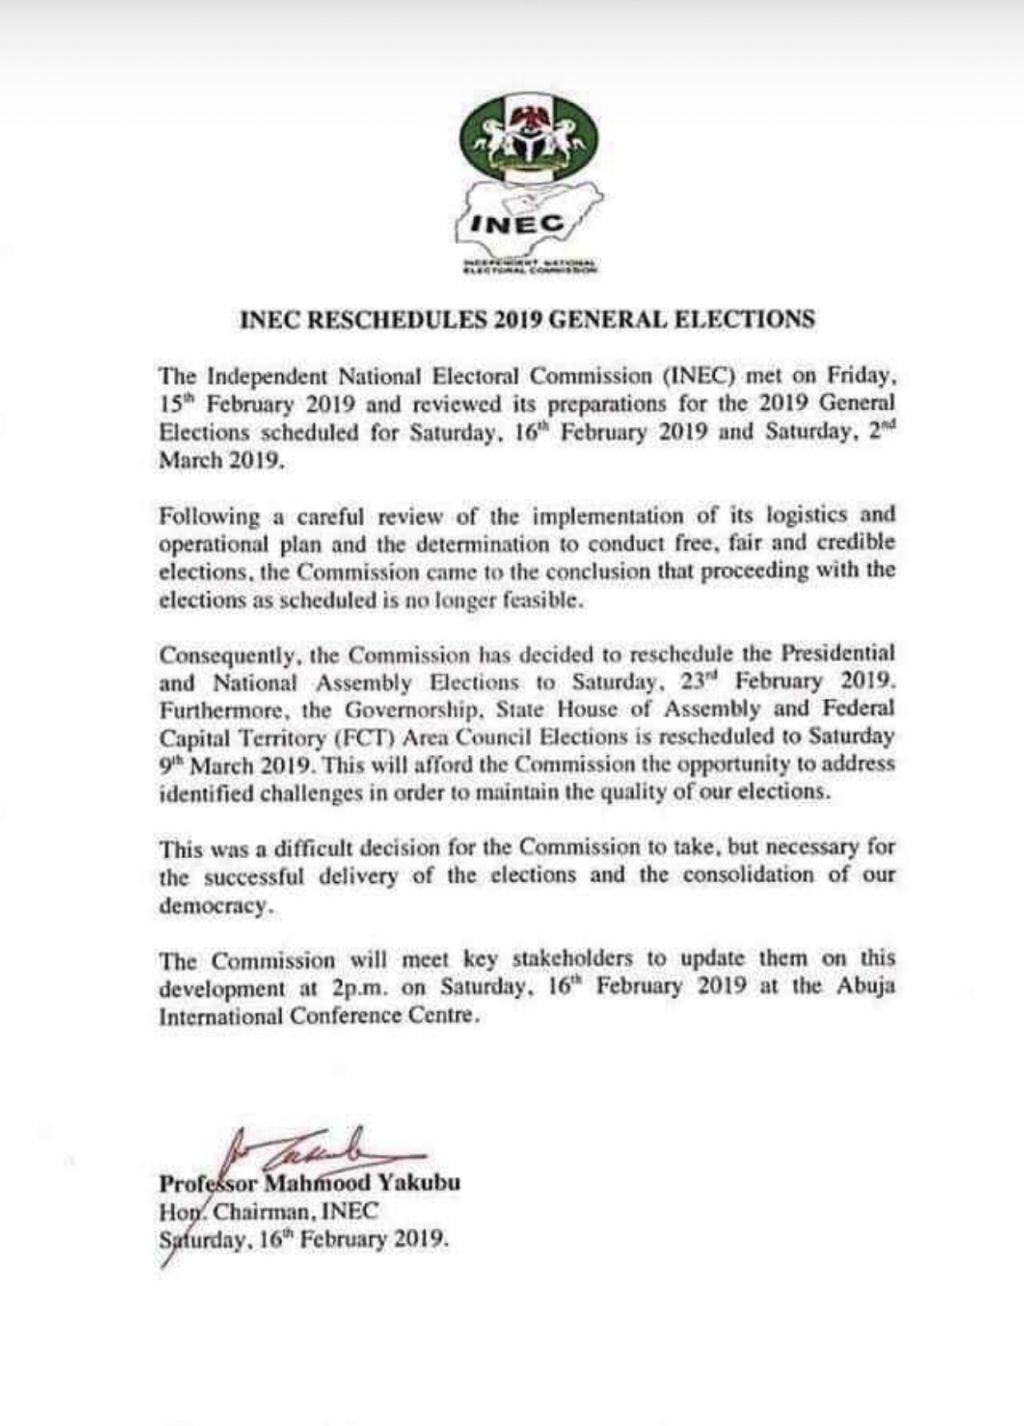 Breaking News: INEC Nigeria Reschedules 2019 General Elections